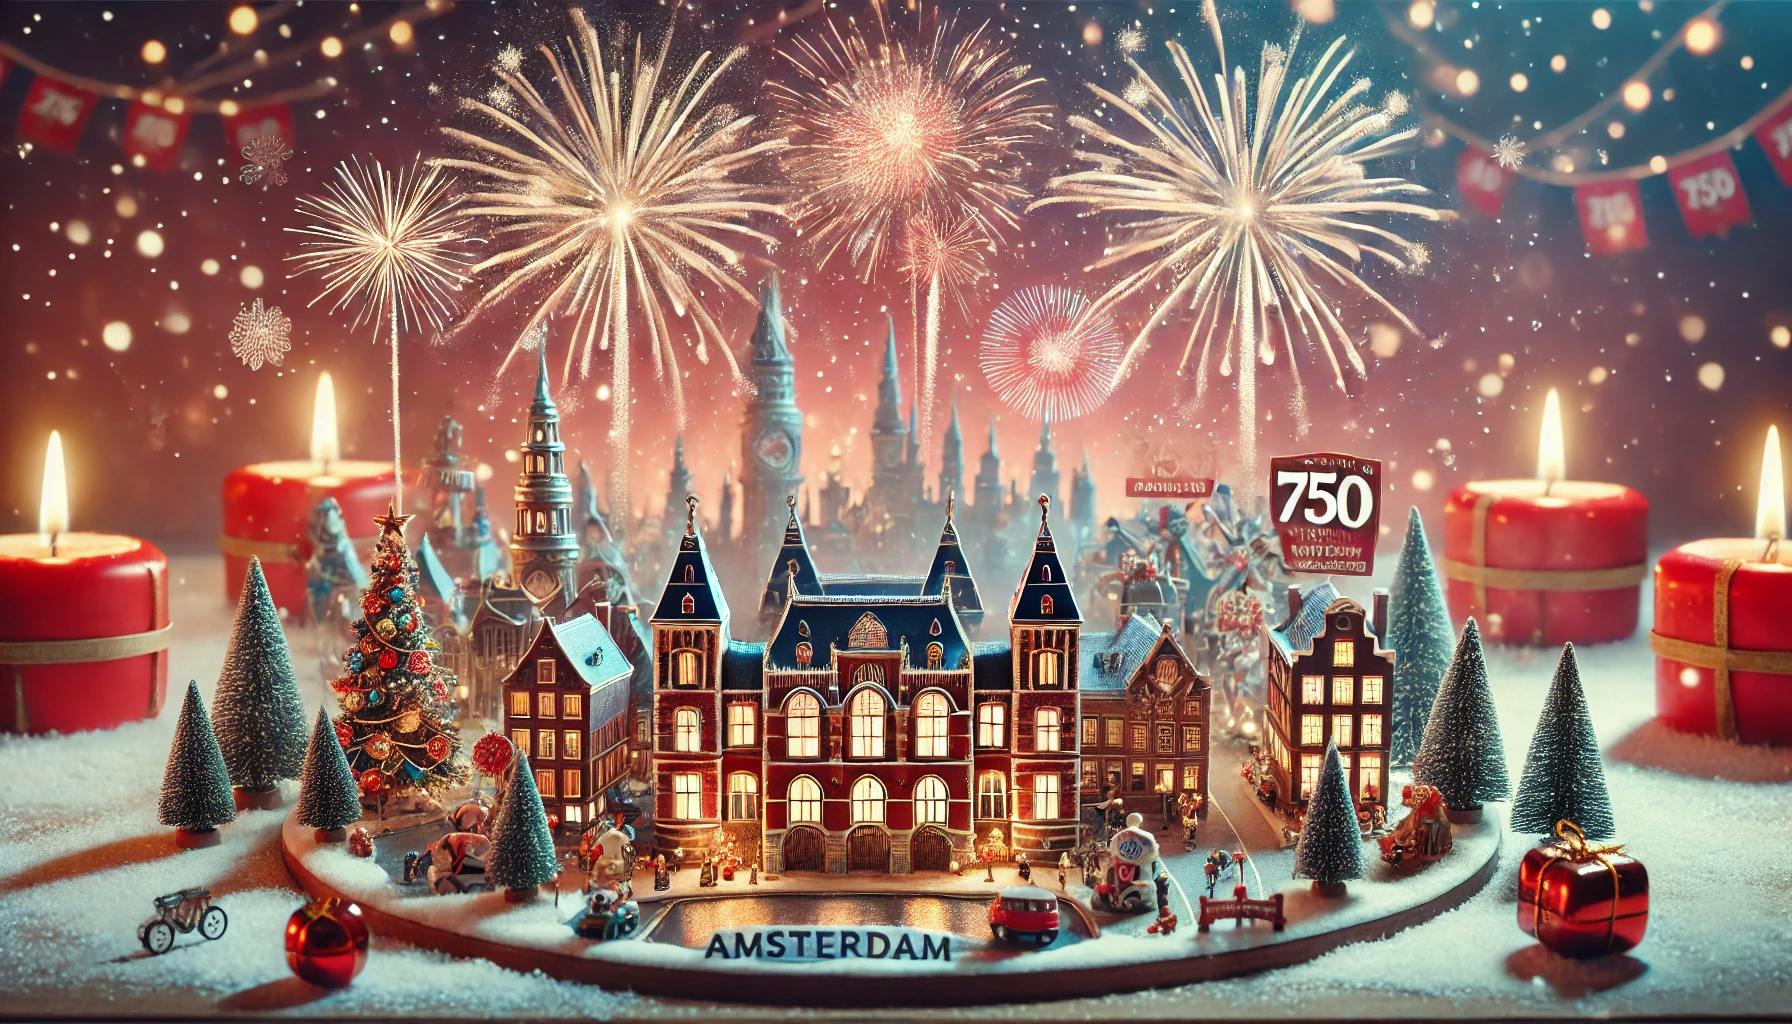 Oud en nieuw viering Amsterdam 750